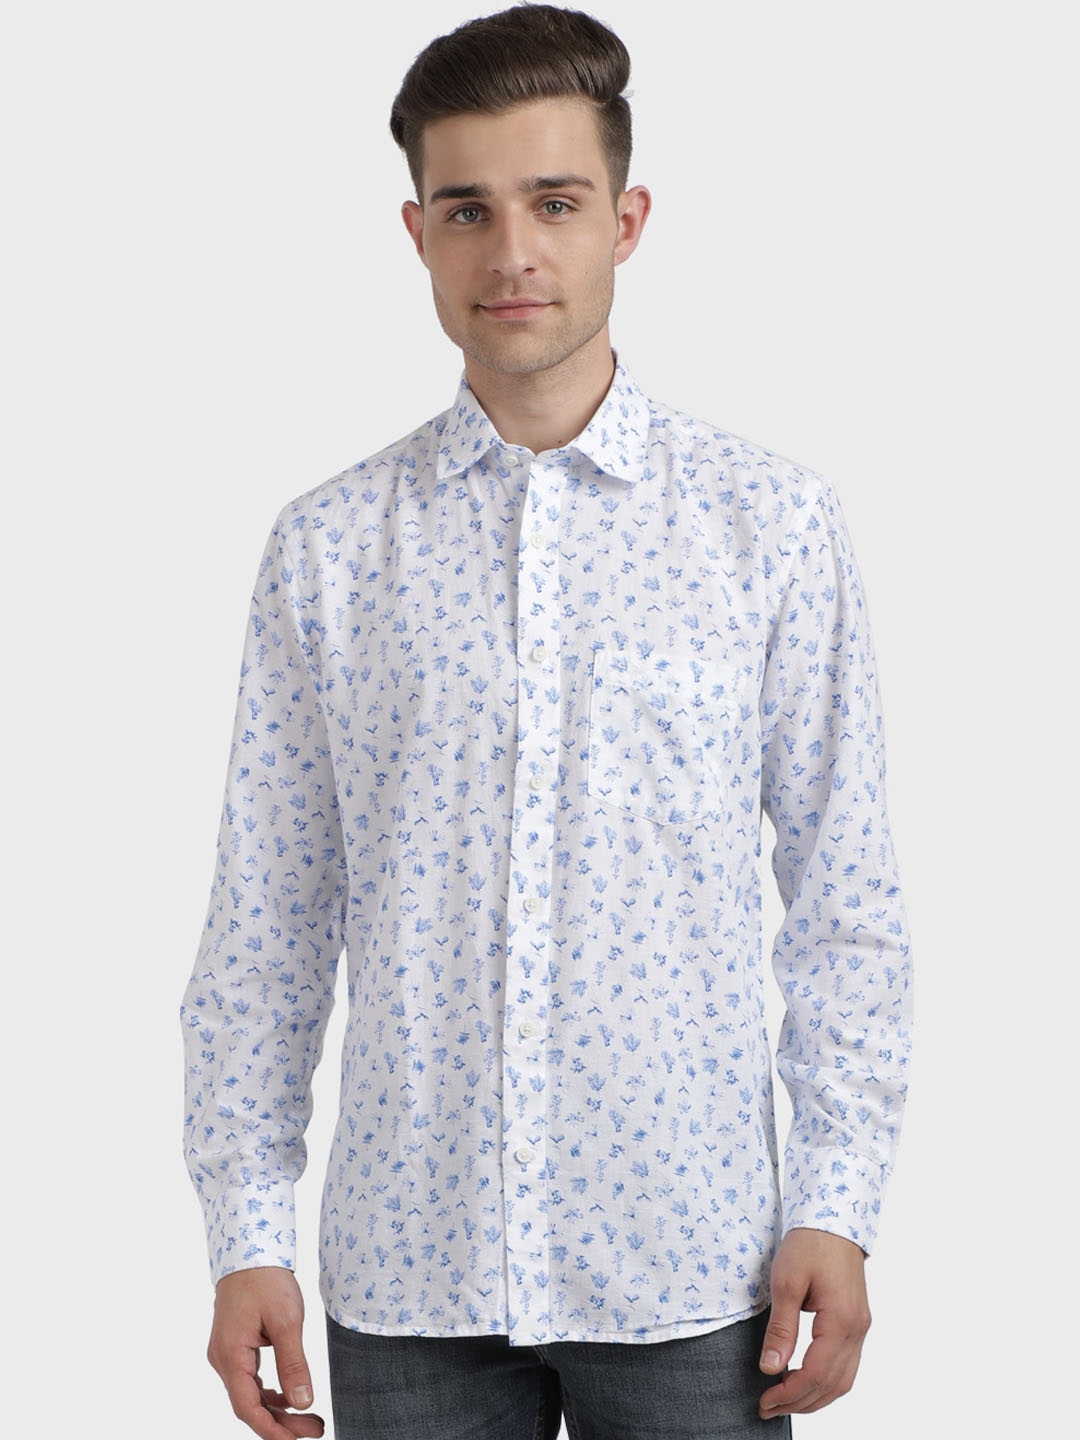 Buy ColorPlus Men White & Blue Regular Fit Floral Printed Casual Shirt ...